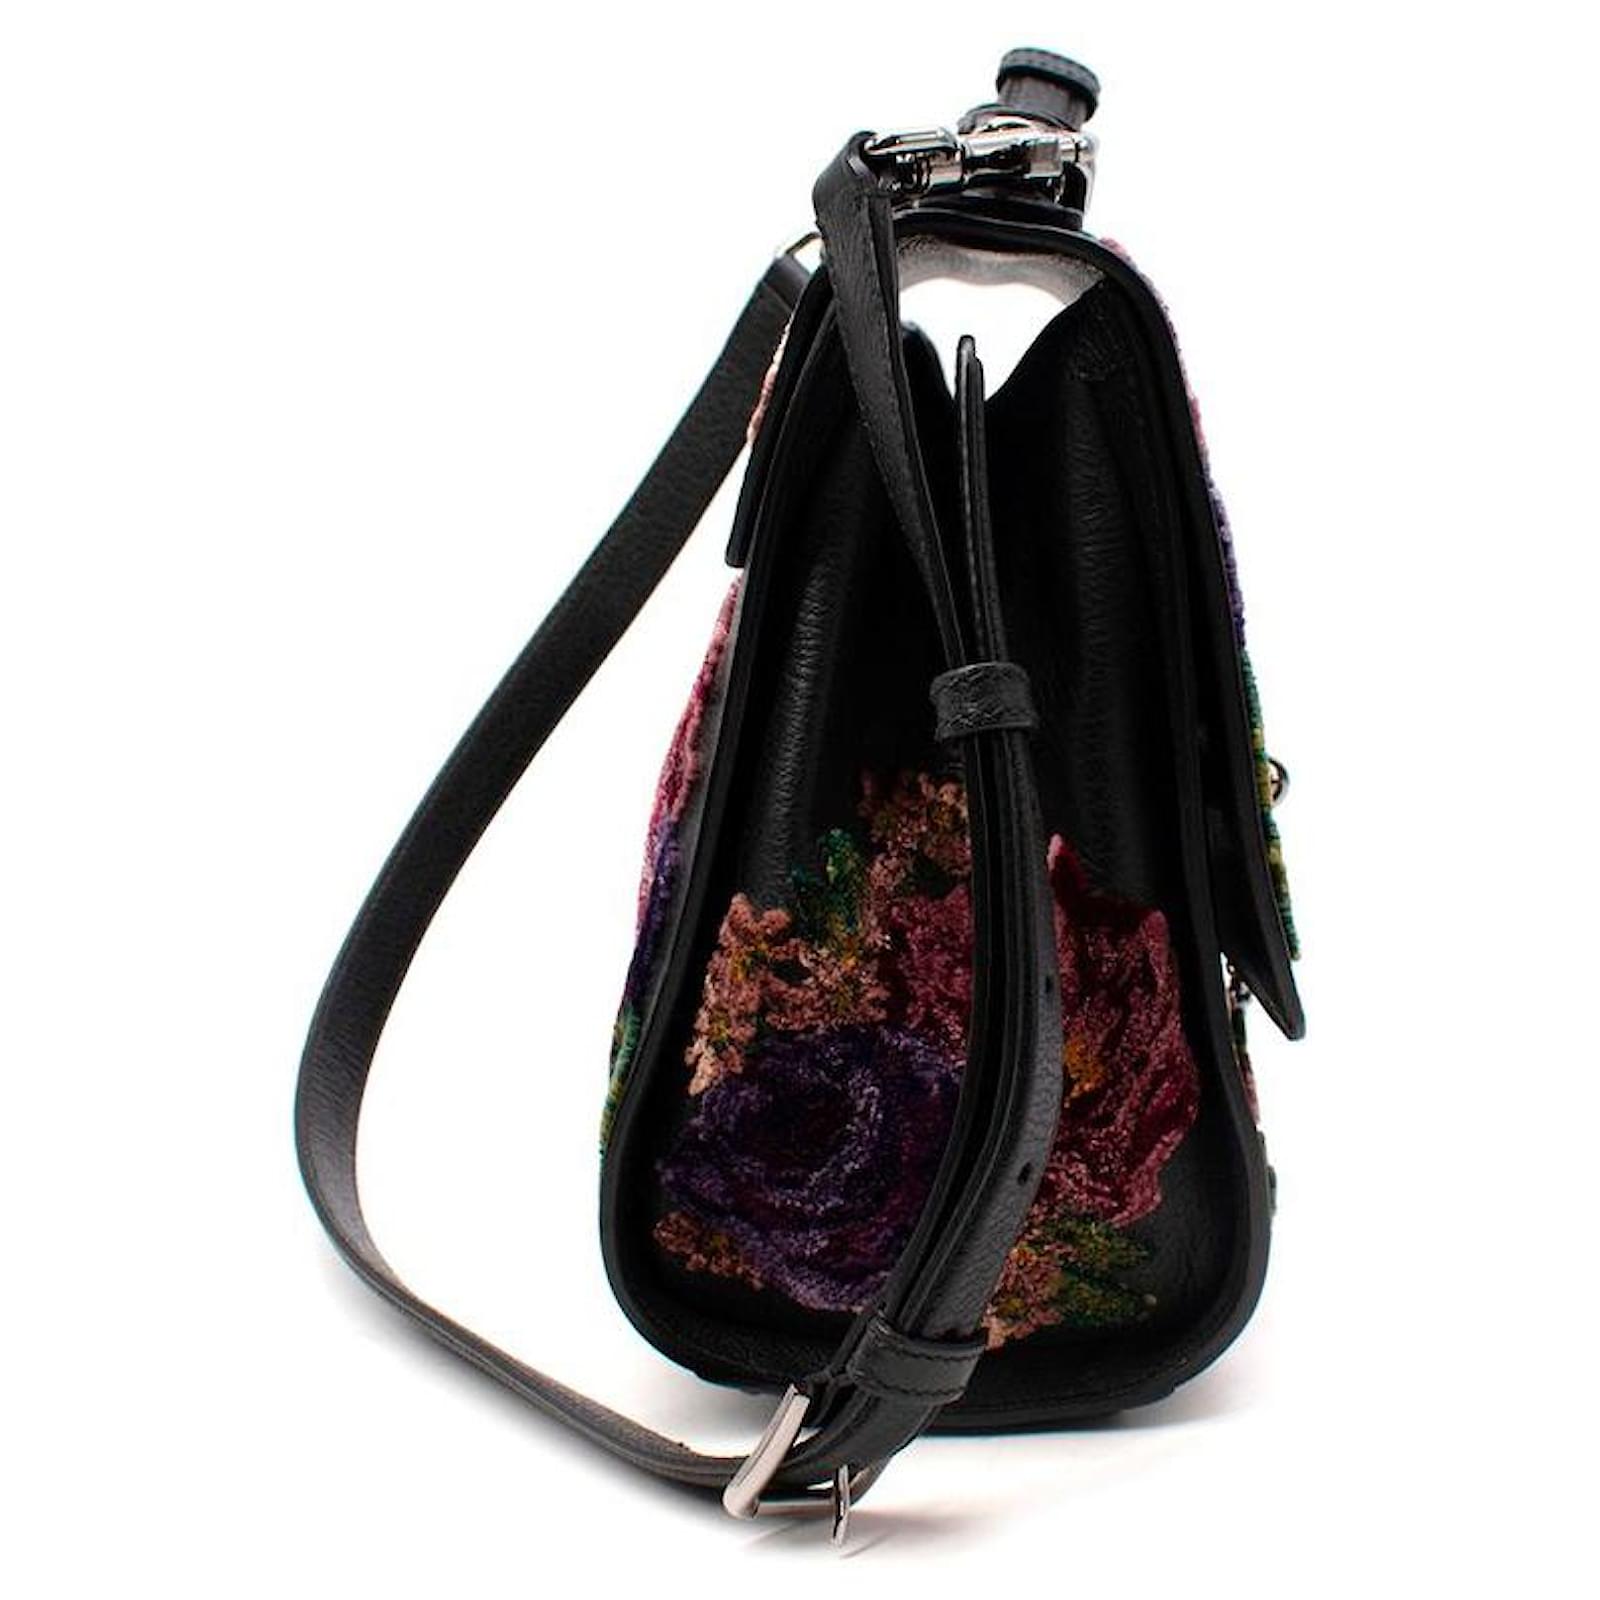 Dolce & Gabbana Monica Bag in Purple Leather 